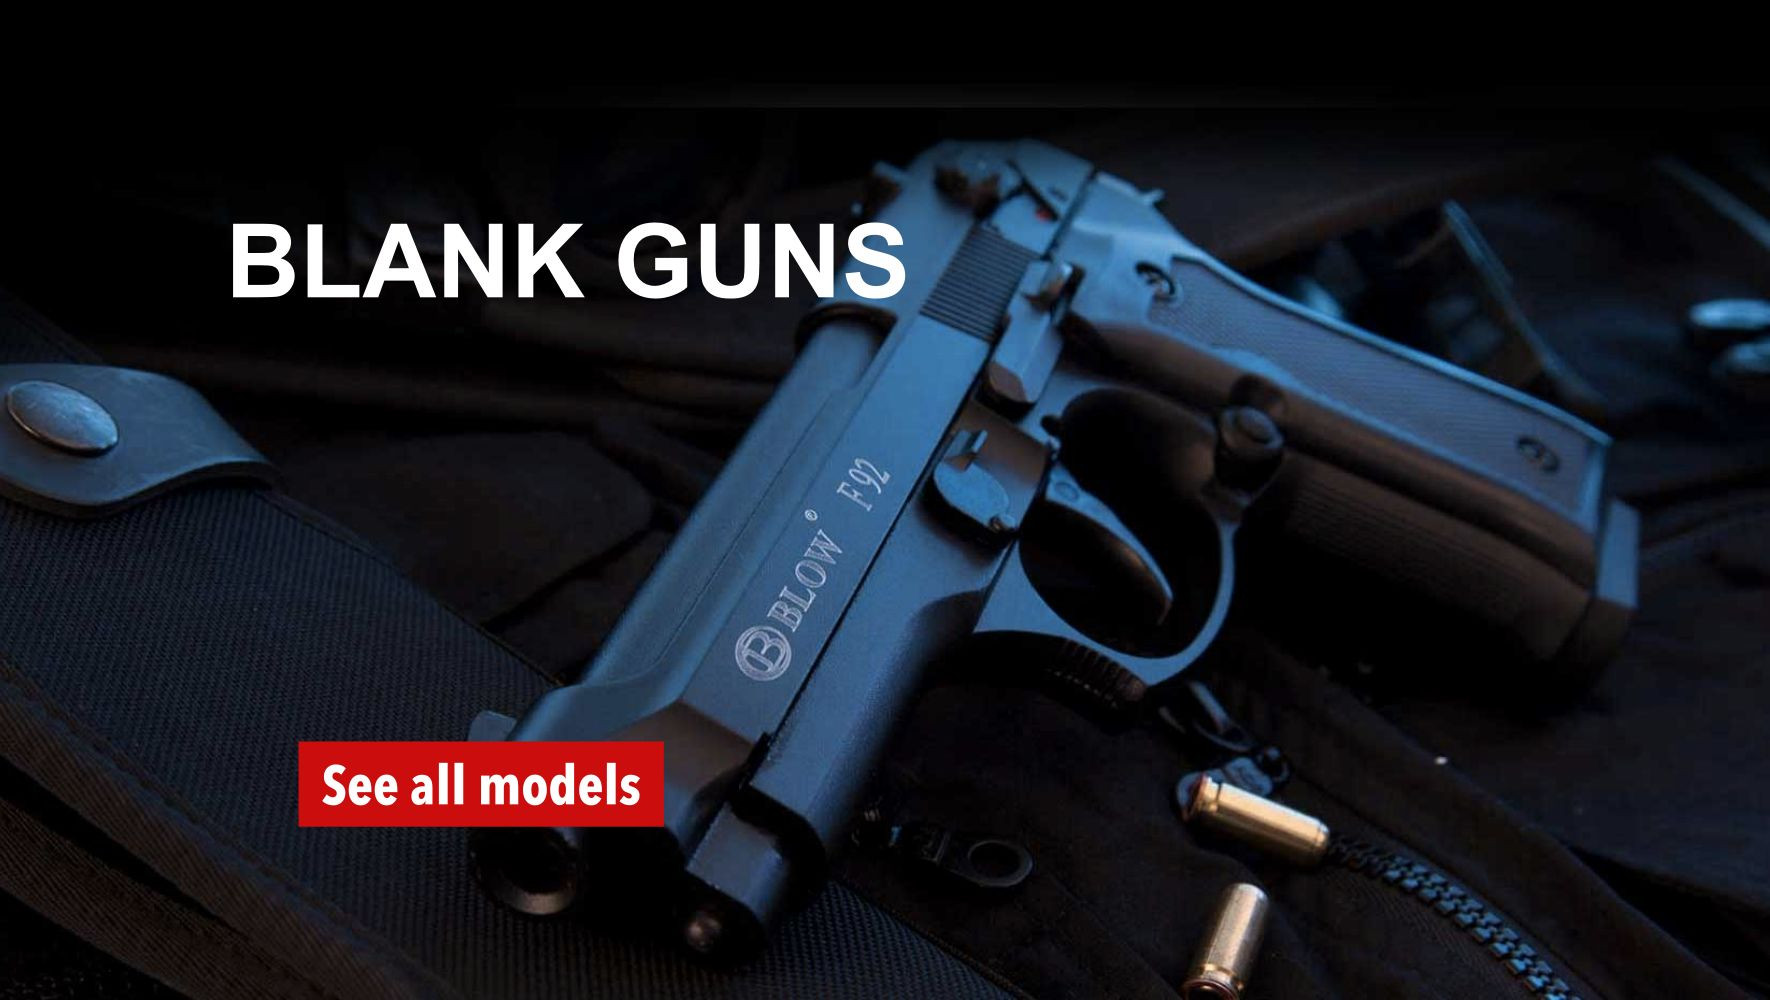 Blank guns